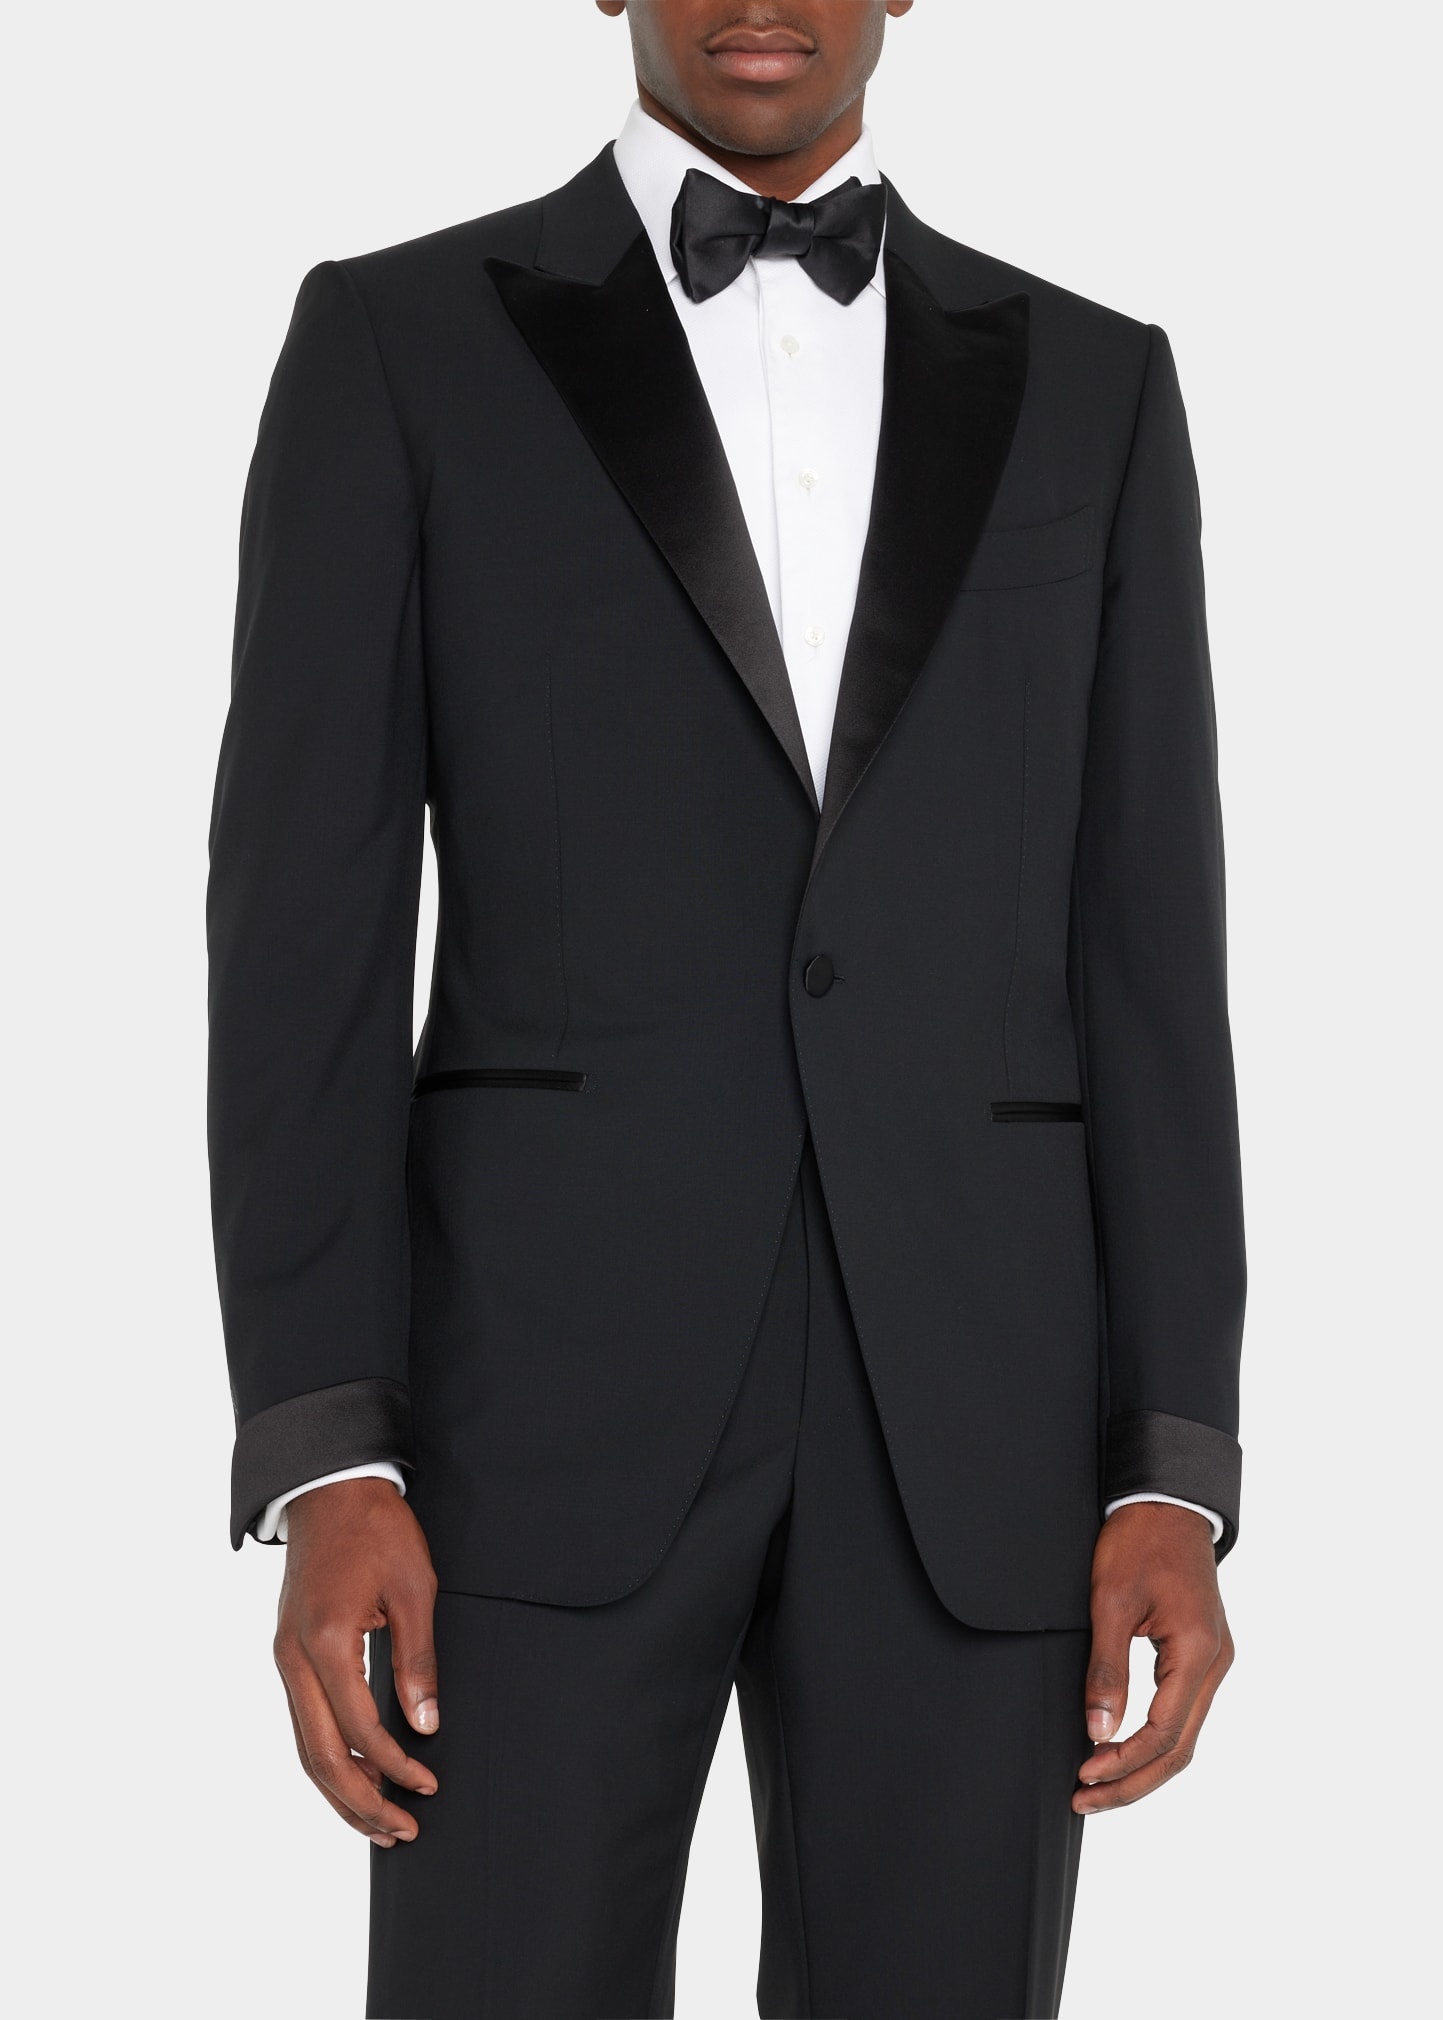 Men's Solid Wool Peak Tuxedo - 4